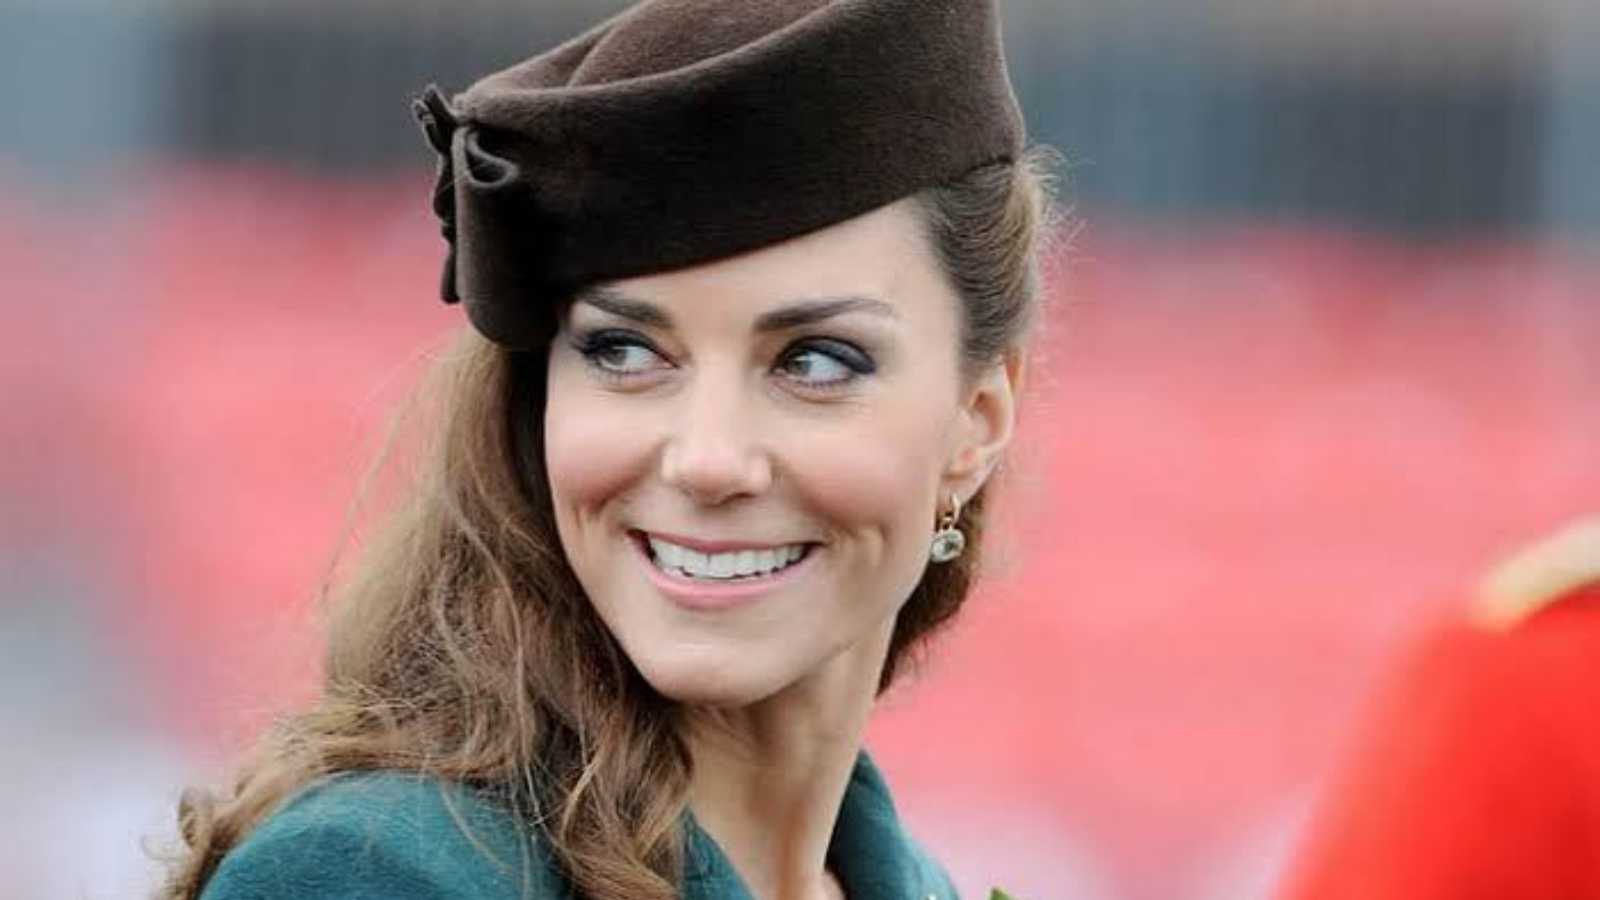 Kate Middleton's net worth